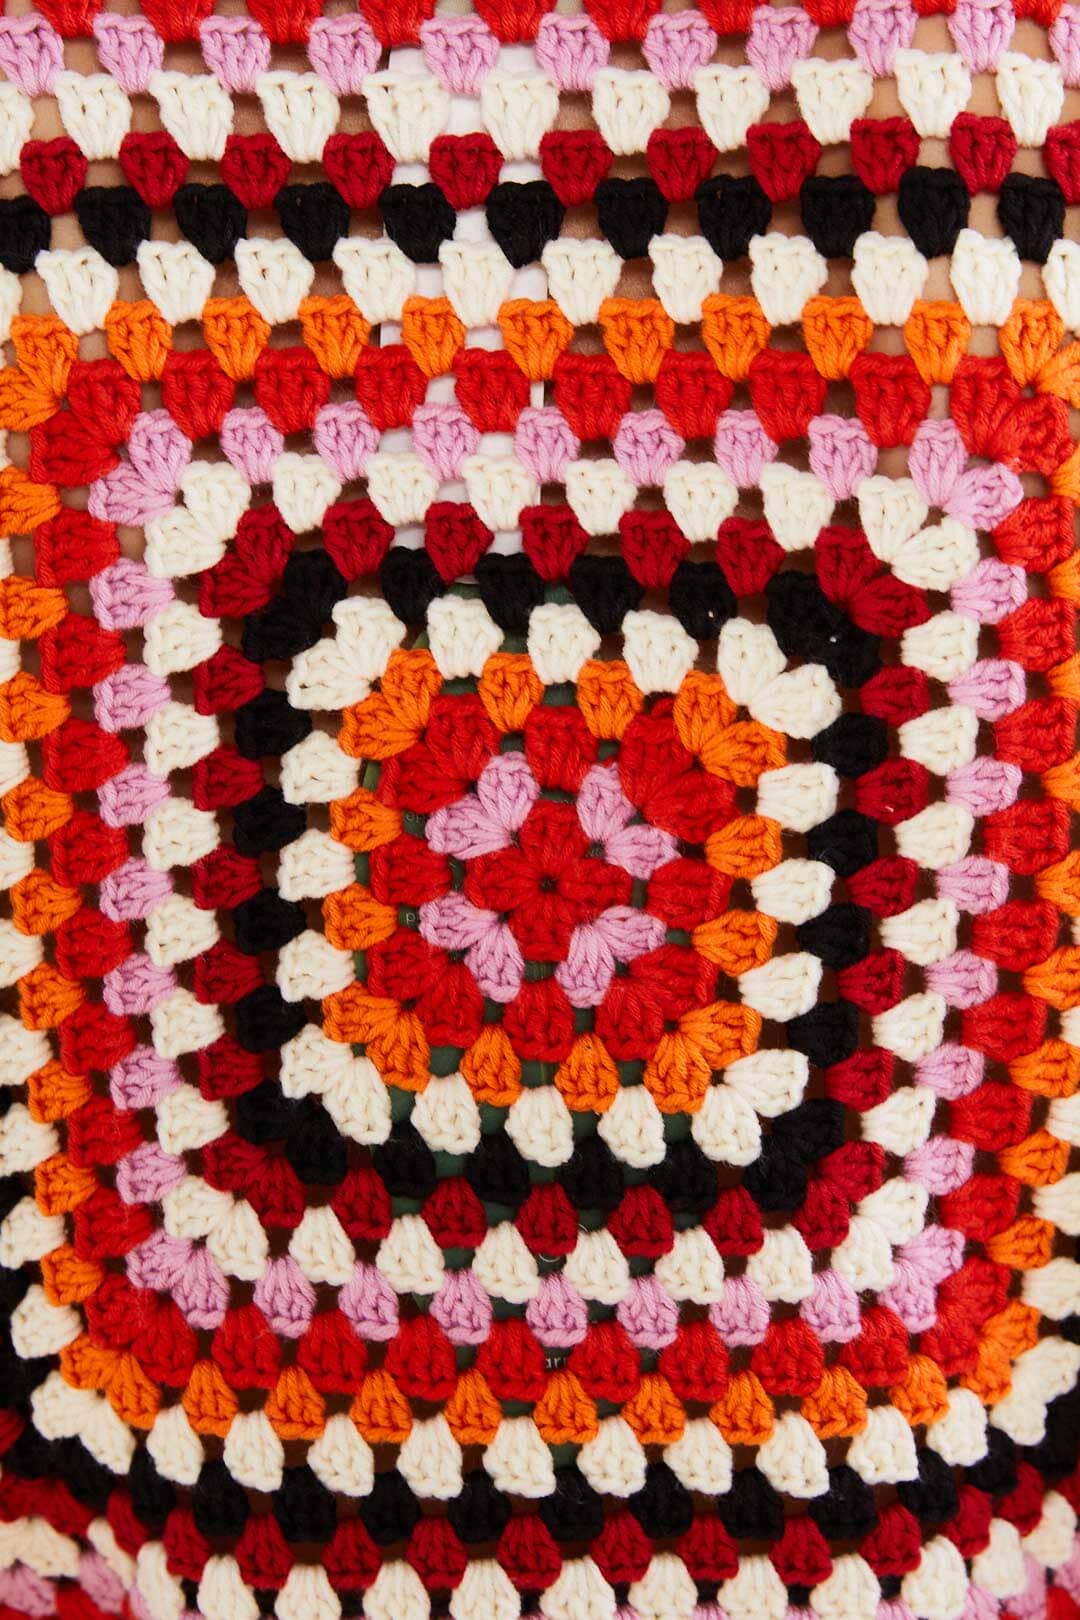 Multicolor Crochet Sweater